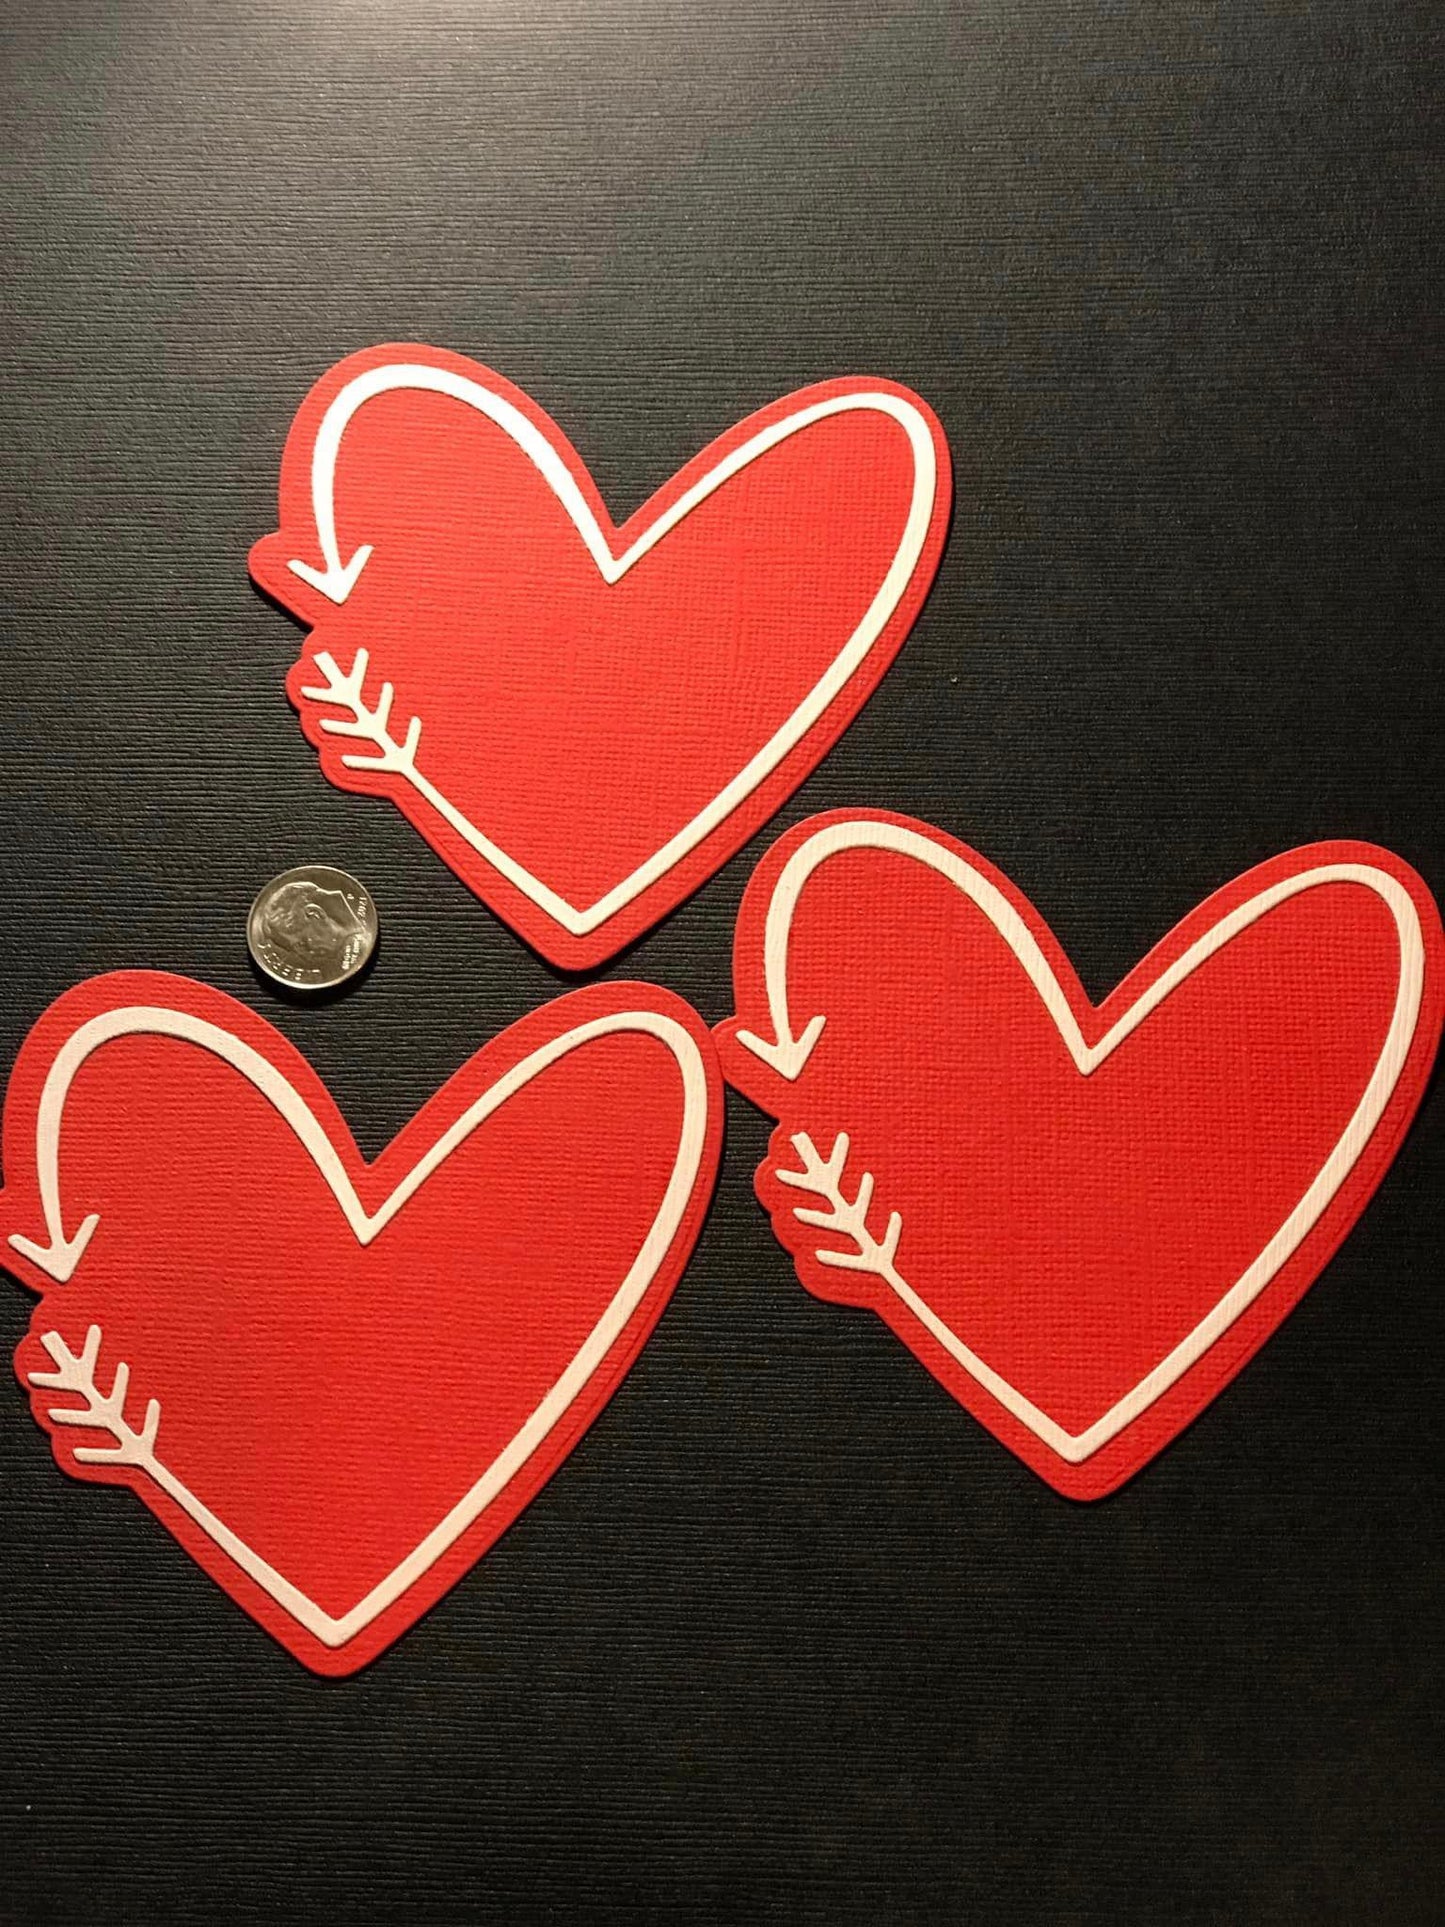 Arrow Hearts Die Cuts Valentine’s